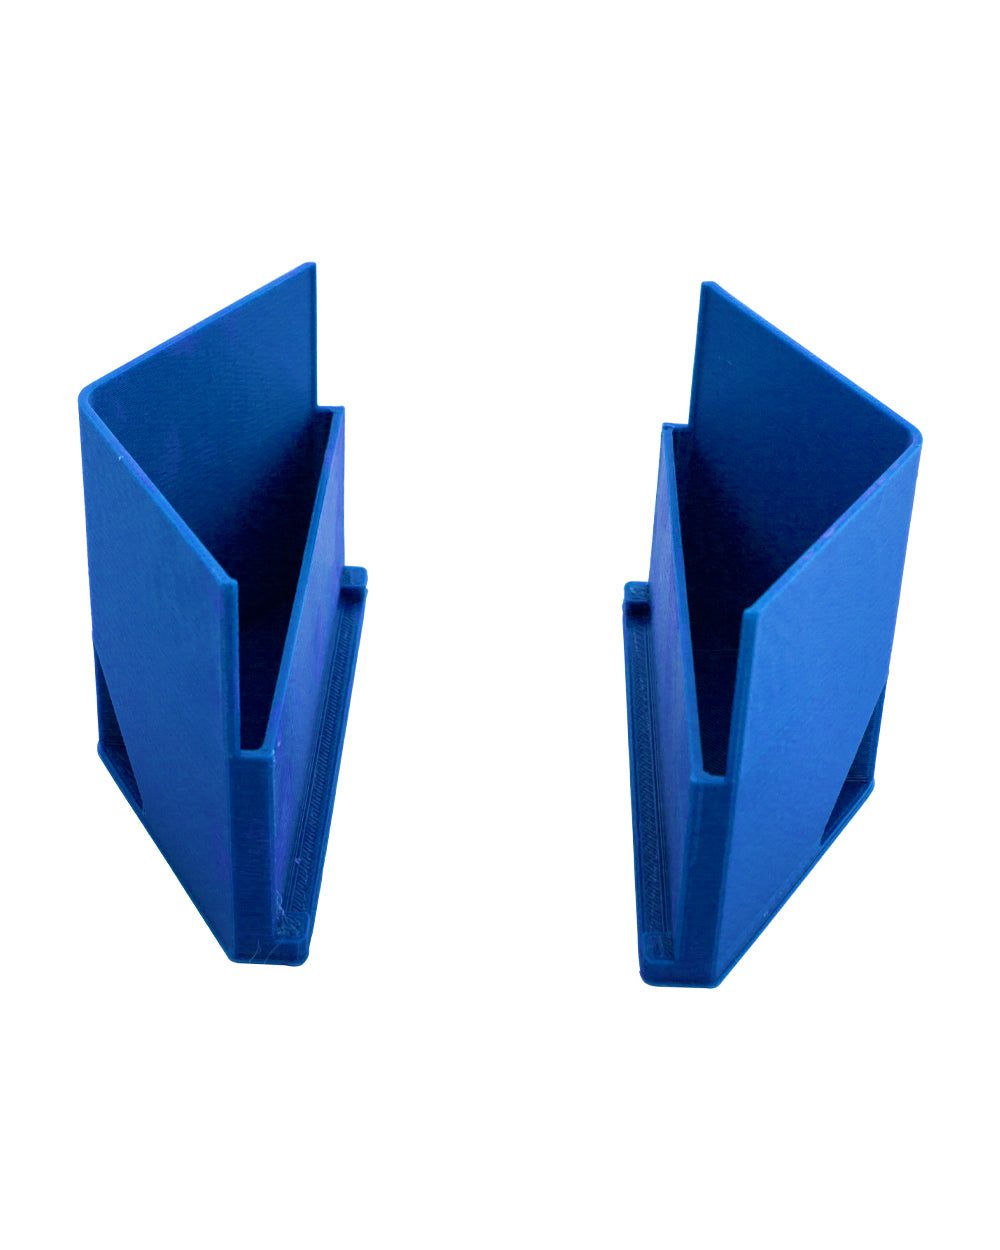 KING KONE | Navy Blue Vibration Pre-Rolled Cones Filling Machine 84/98/109mm | Fill 169 Cones Per Run - 7